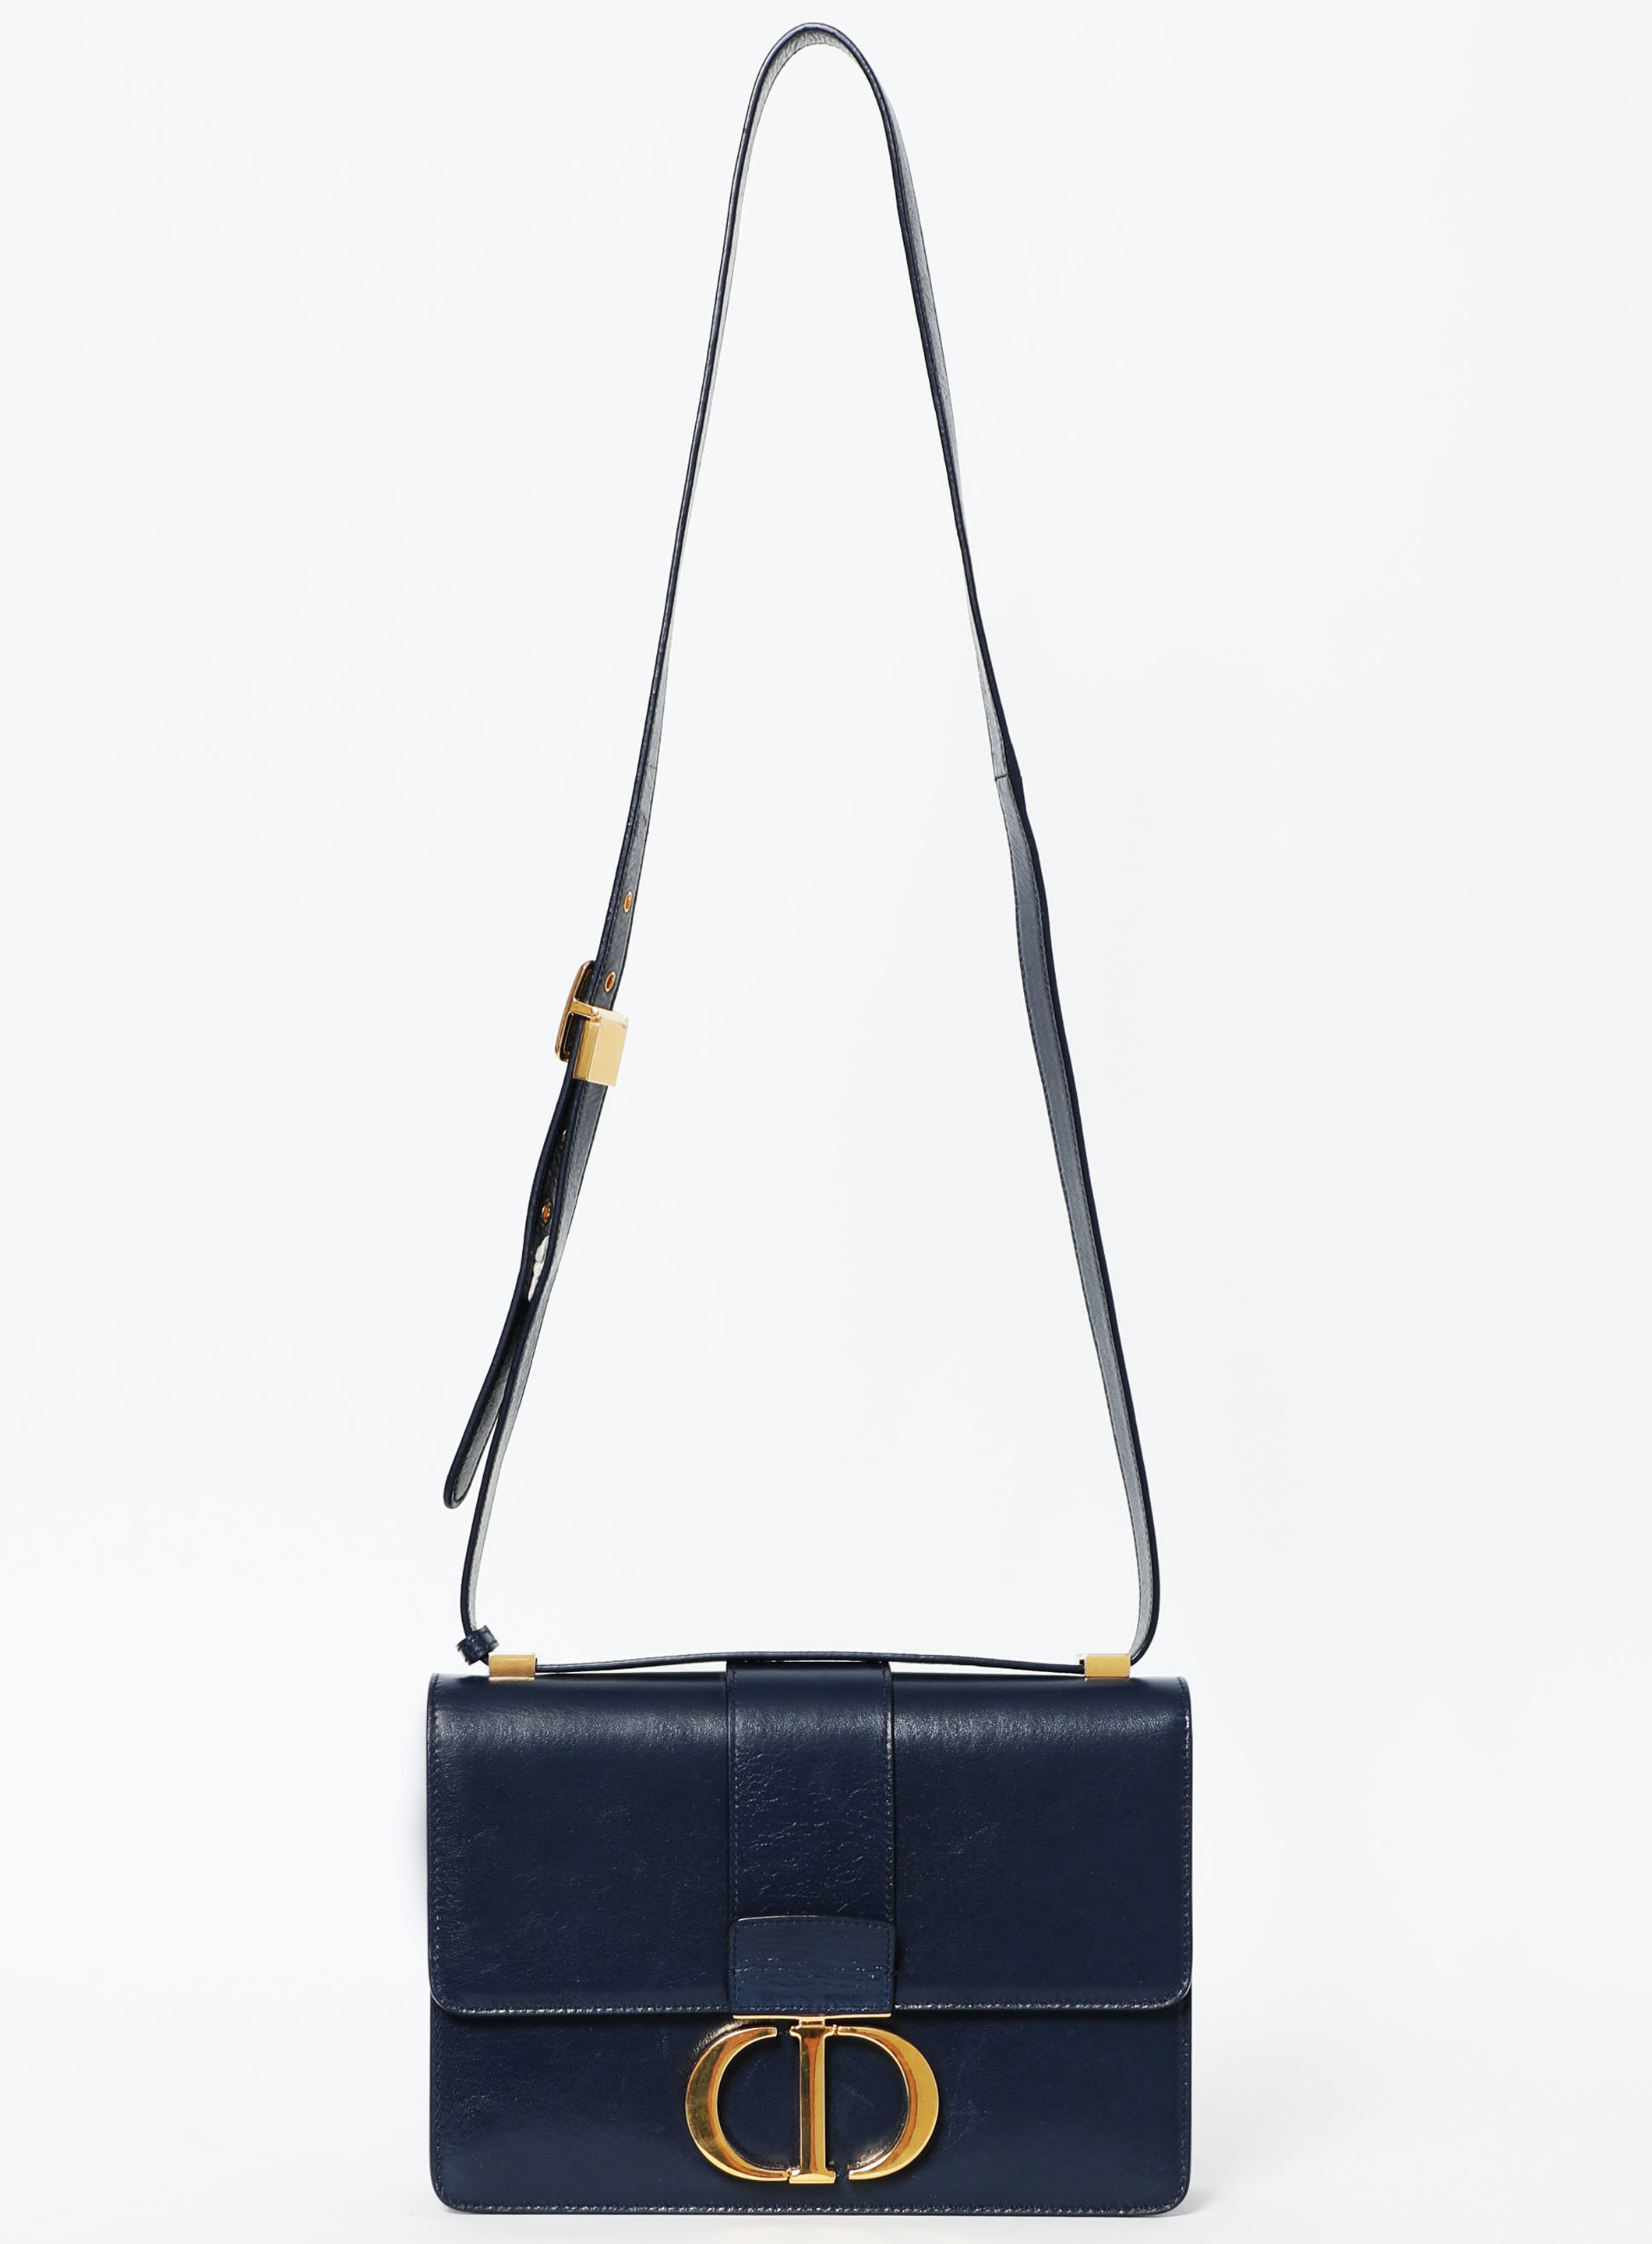 Arabic Style Arabesque Pattern Personalized Handbag PU Leather